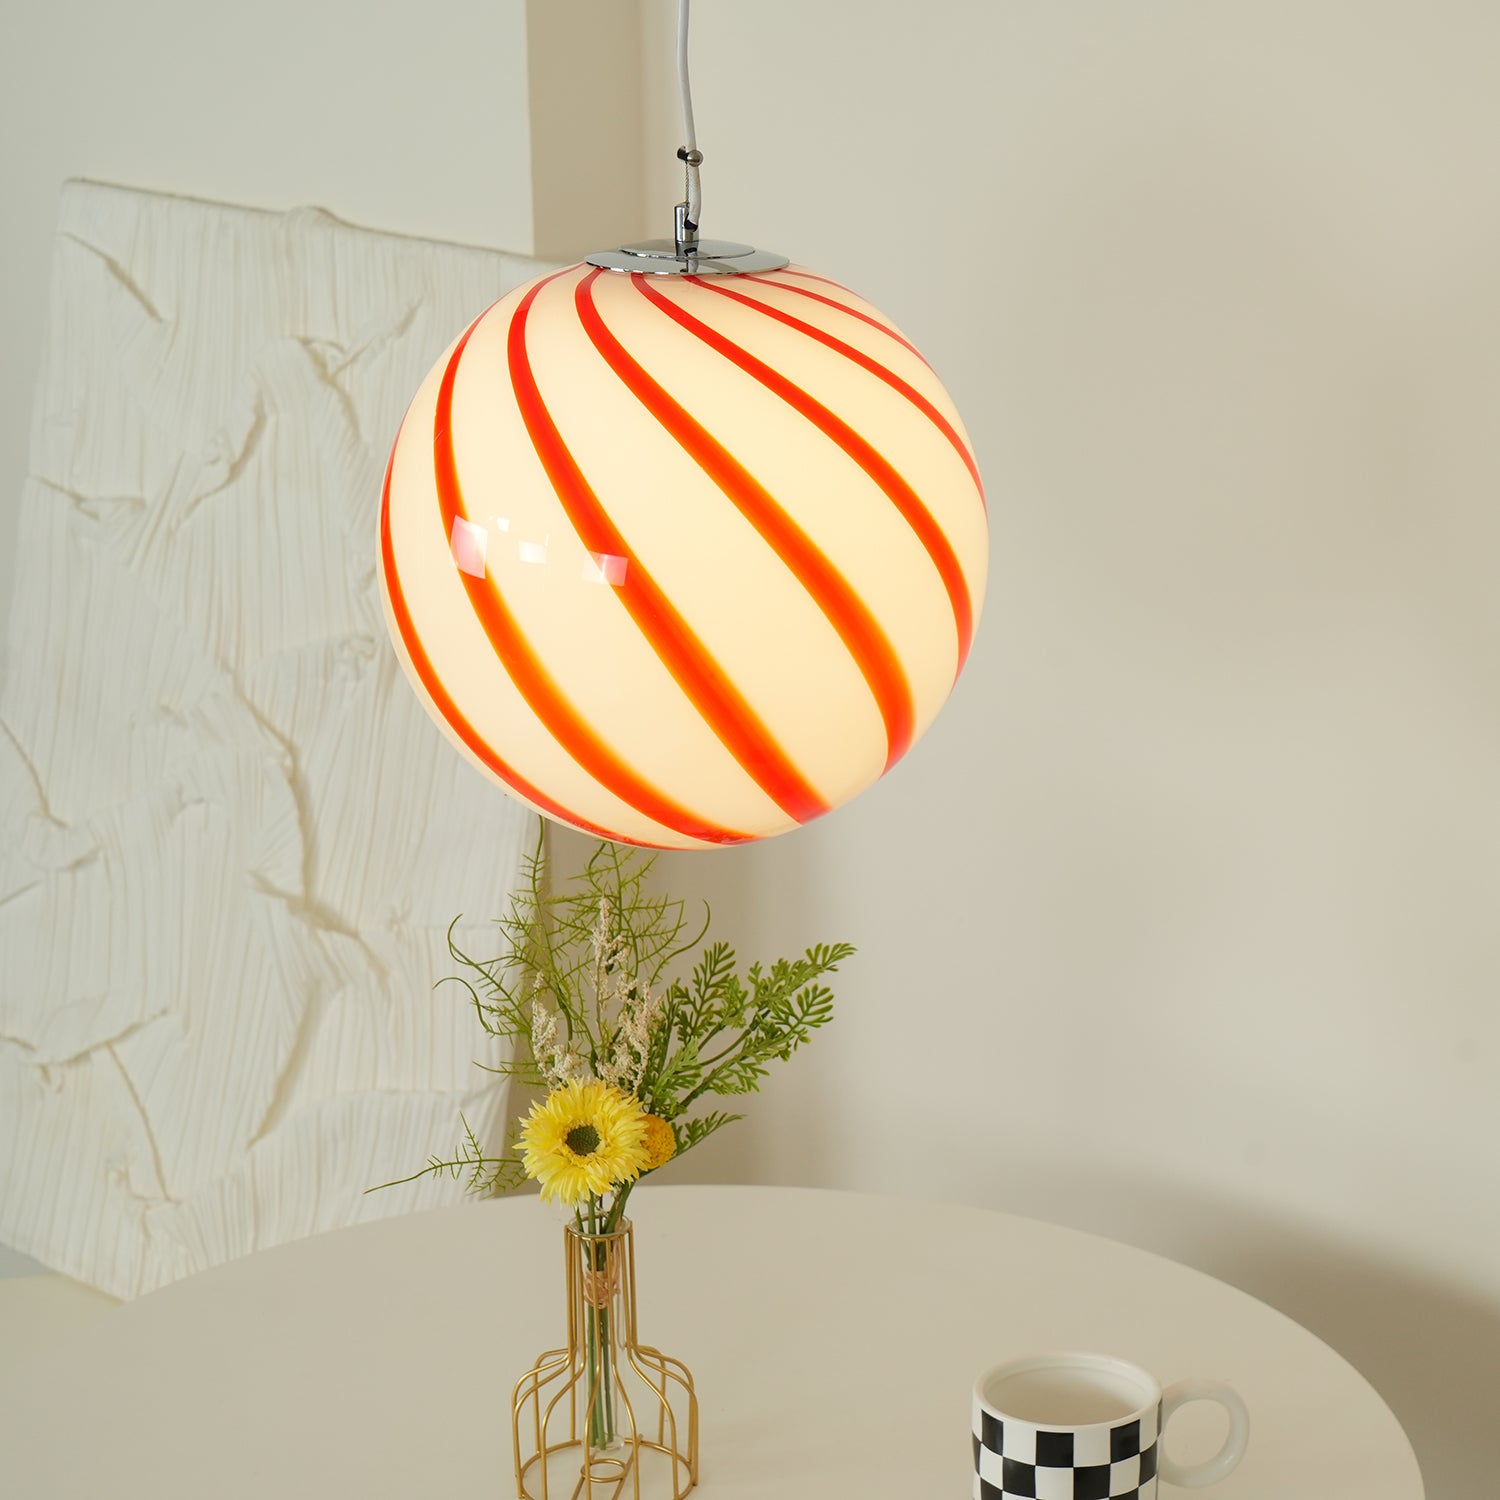 Lollipop Pendant Lamp 11.8″